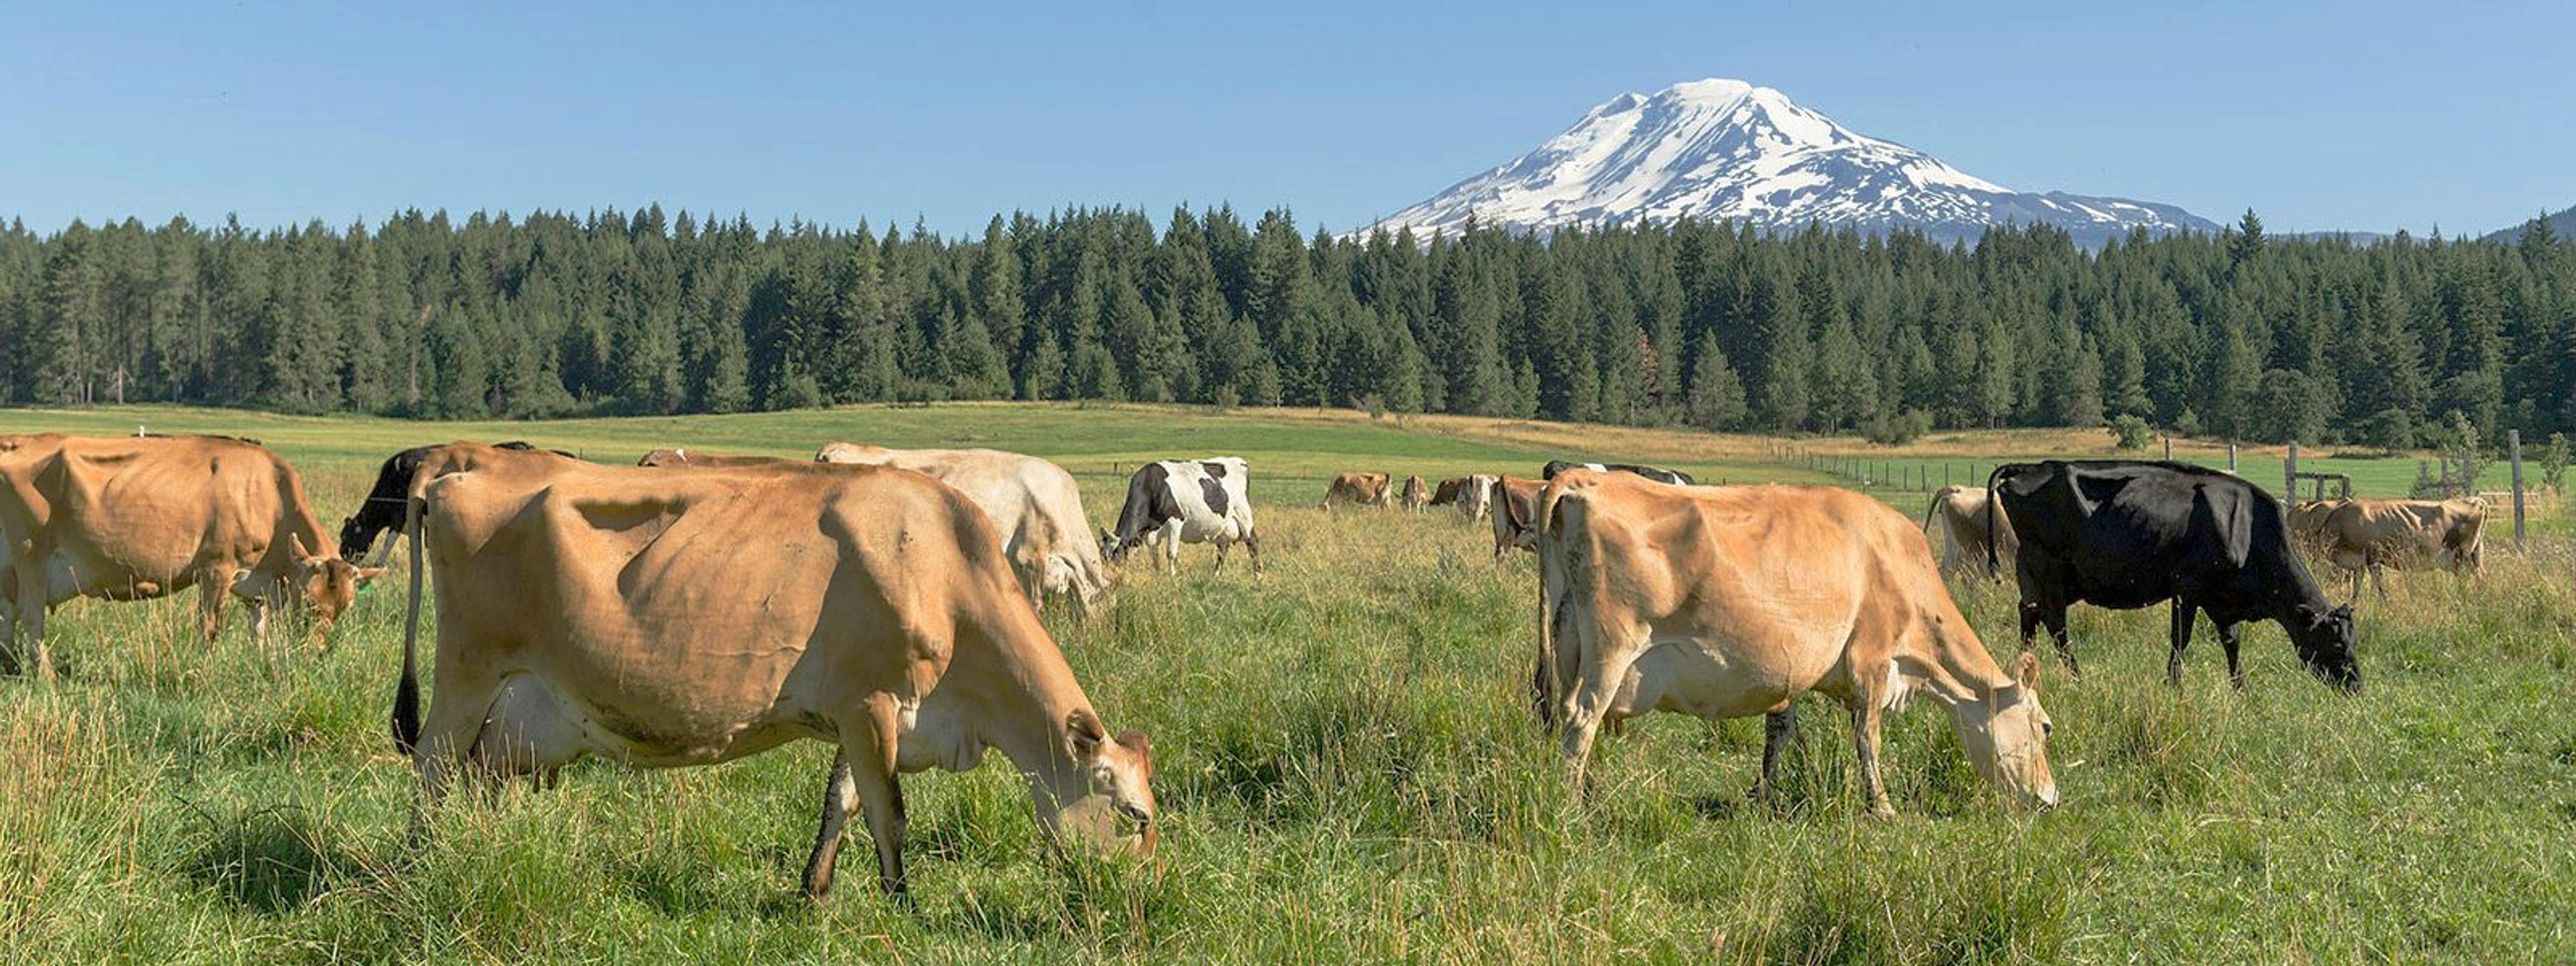 Pasture-Raised: Cows Belong in the Fields